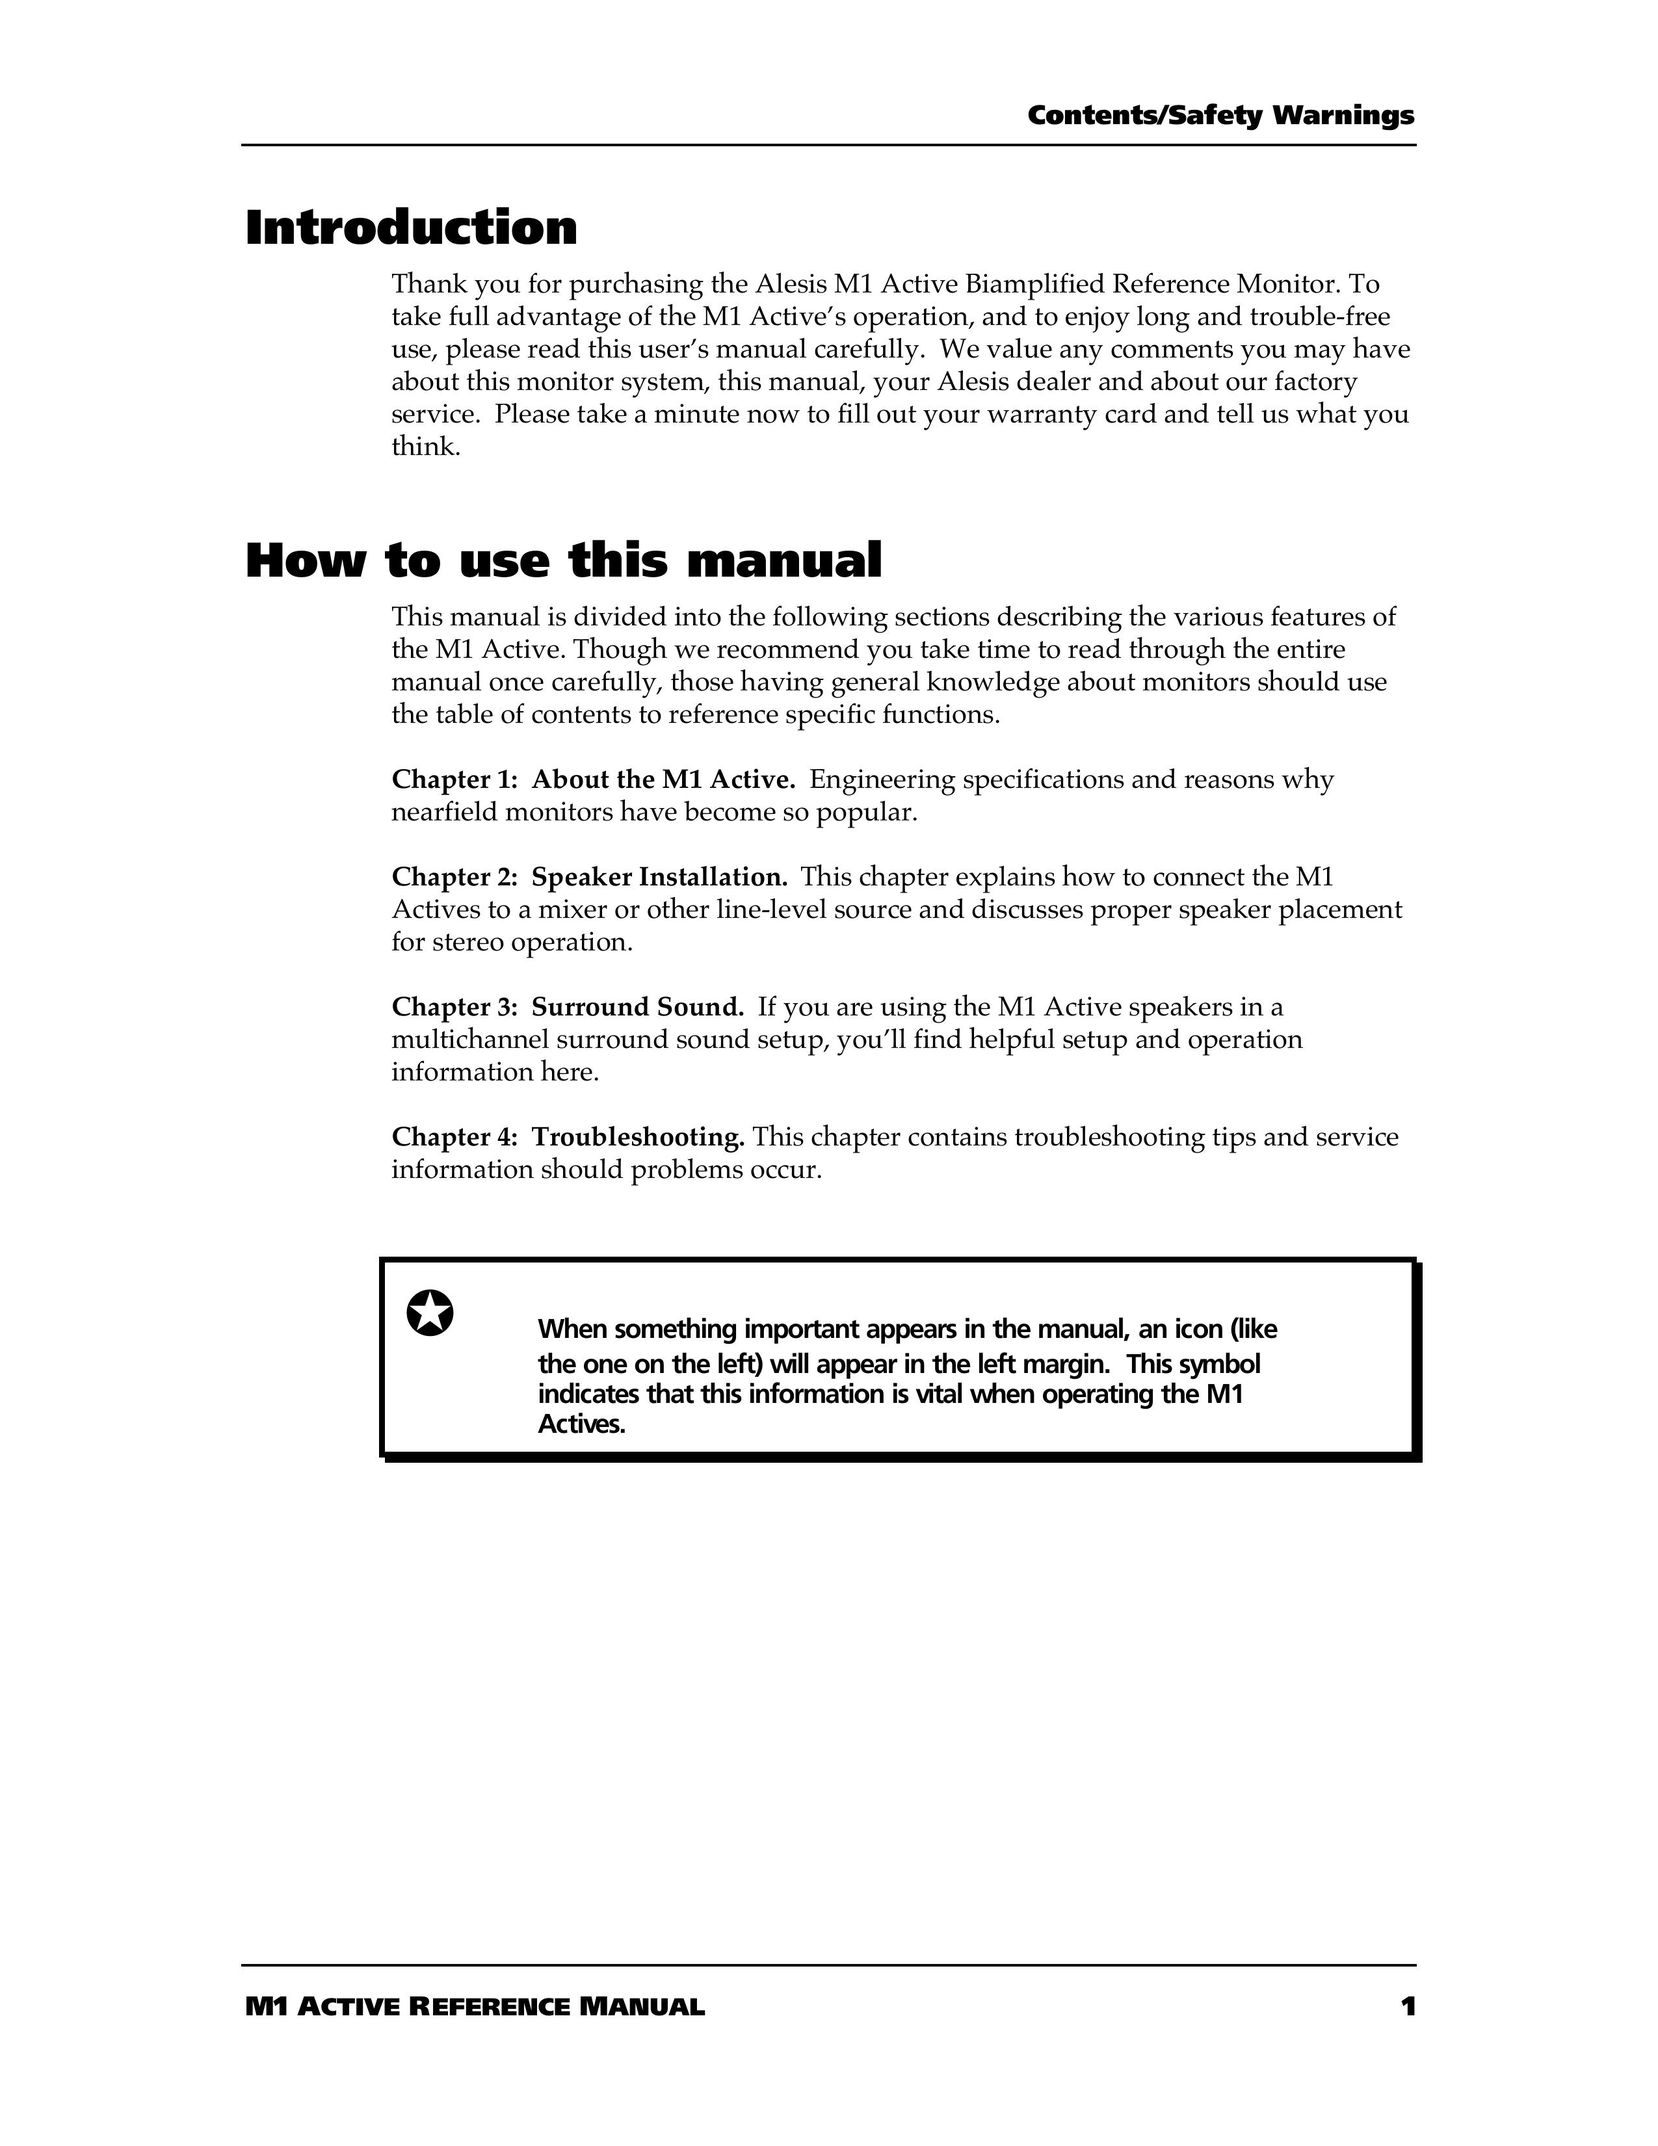 Alesis M1 Computer Monitor User Manual (Page 1)